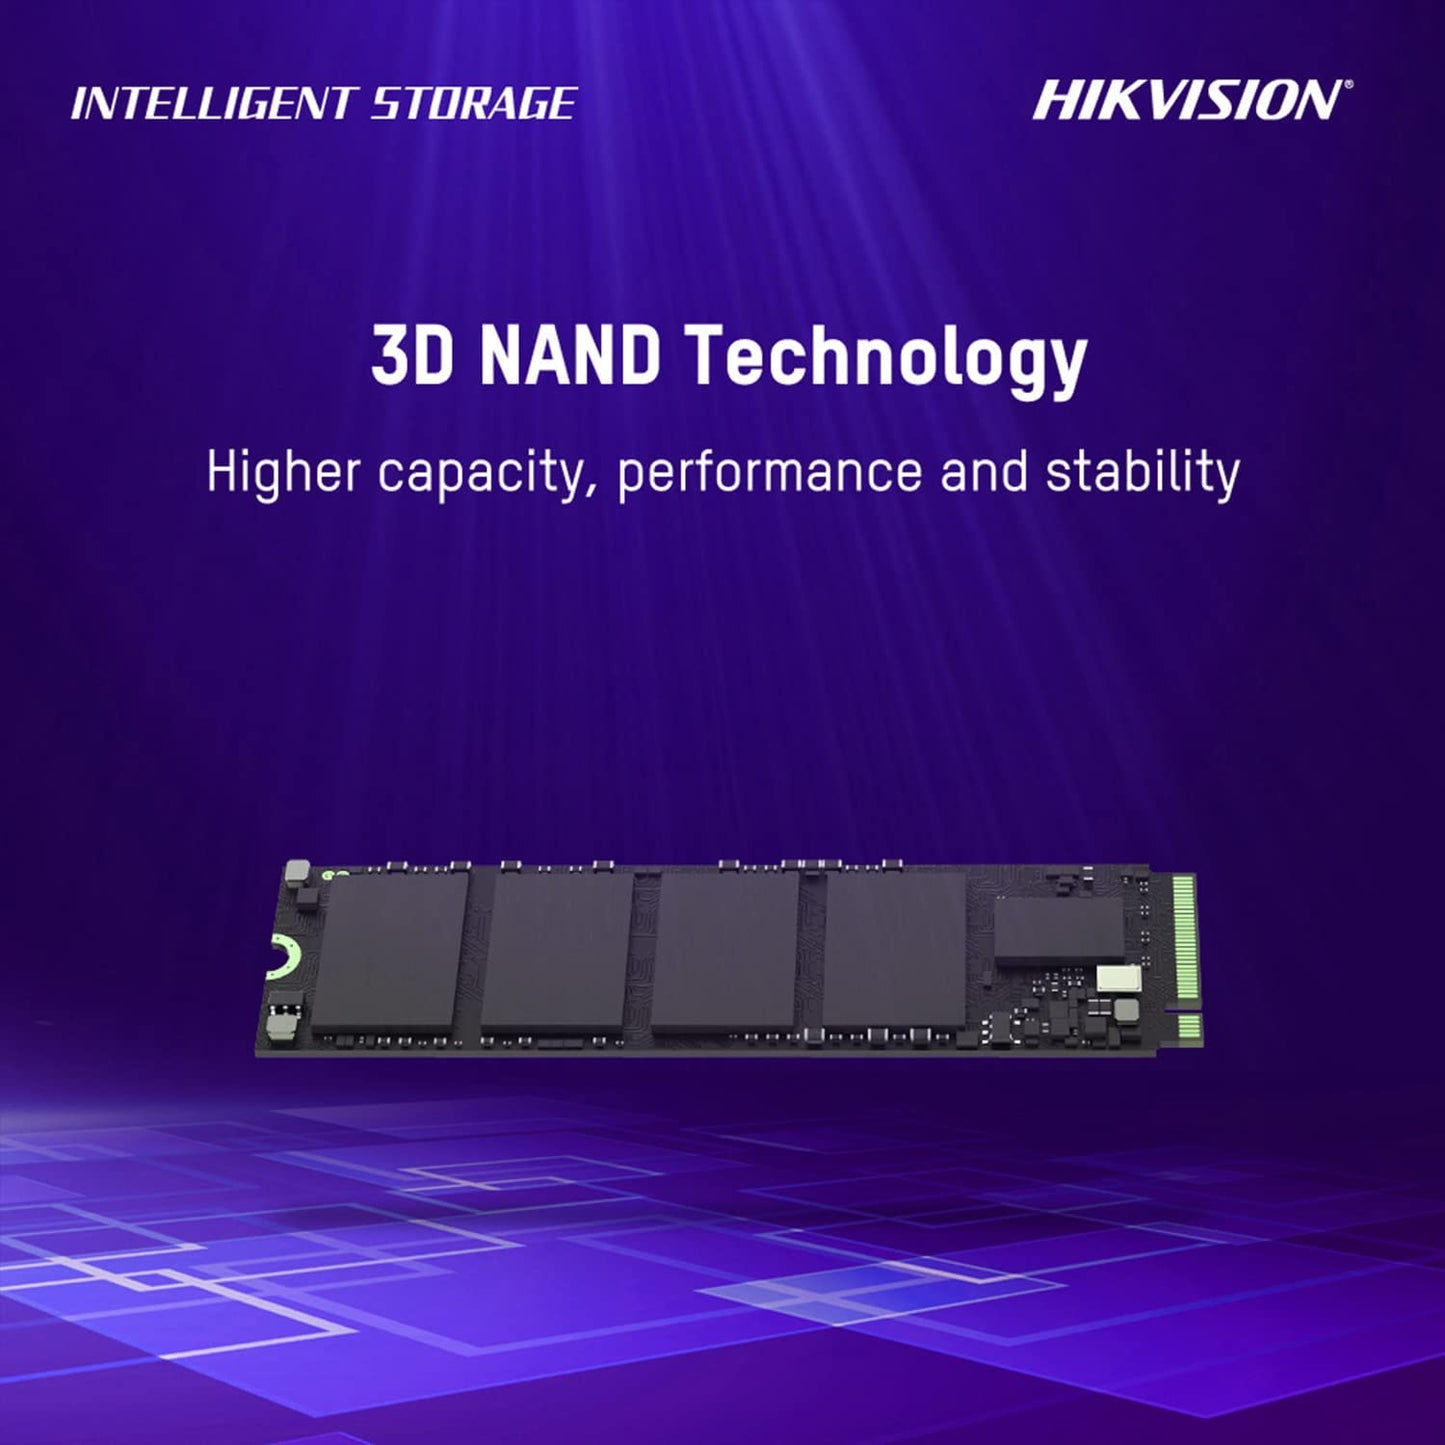 HIKVISION 256 GB  E3000 PCIe NVMe M.2 (2280)